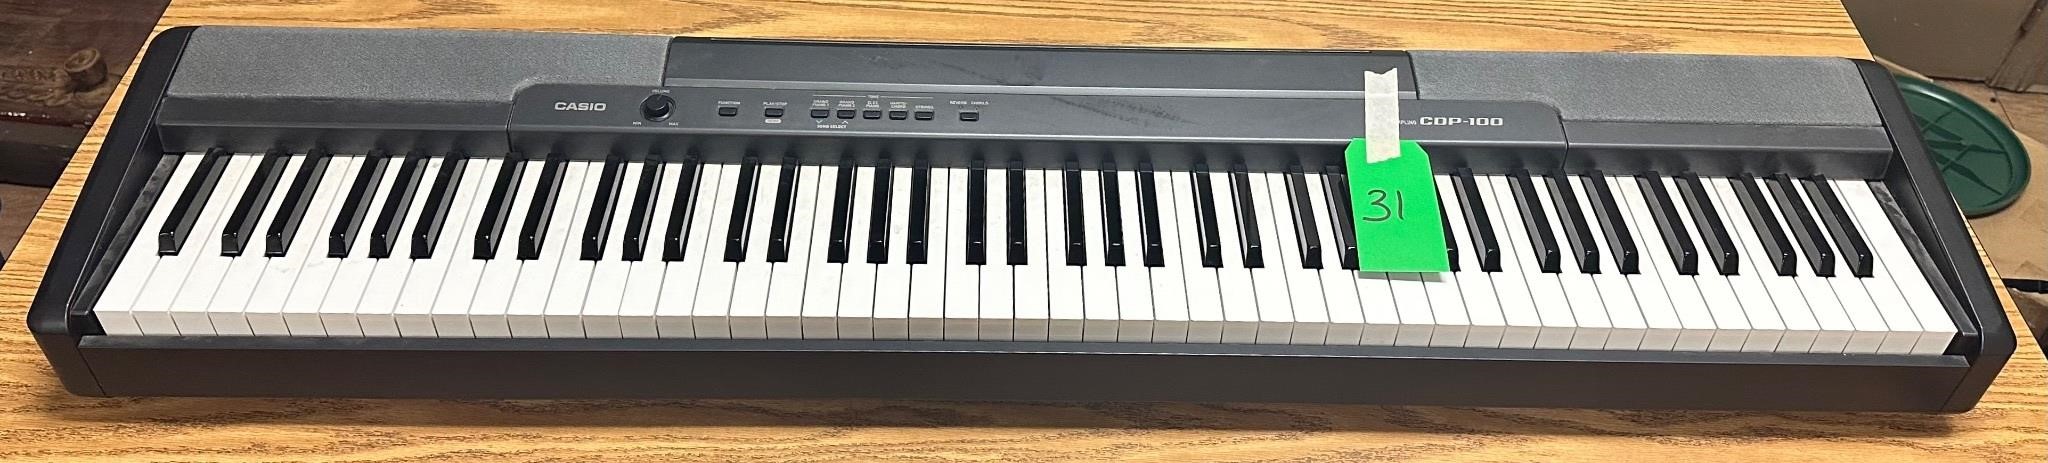 Casio Keyboard (No Cords-Condition UnKnown)